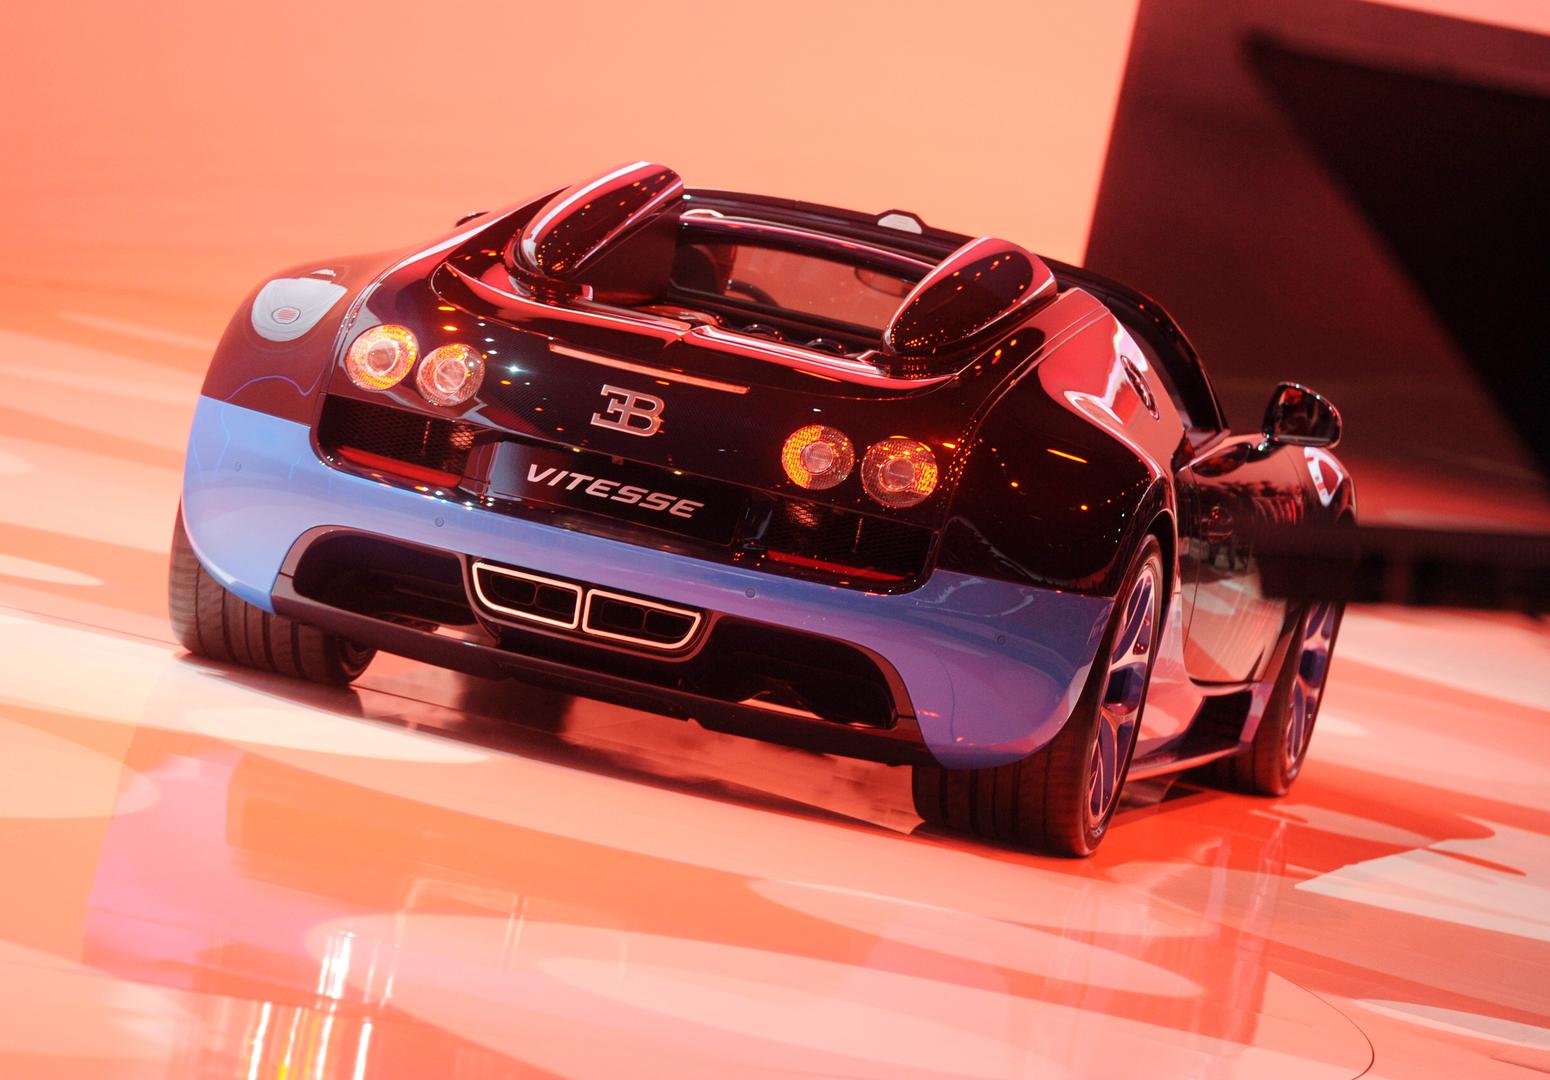 Cristiano Ronaldo - Bugatti Veyron - 13 milijuna kuna